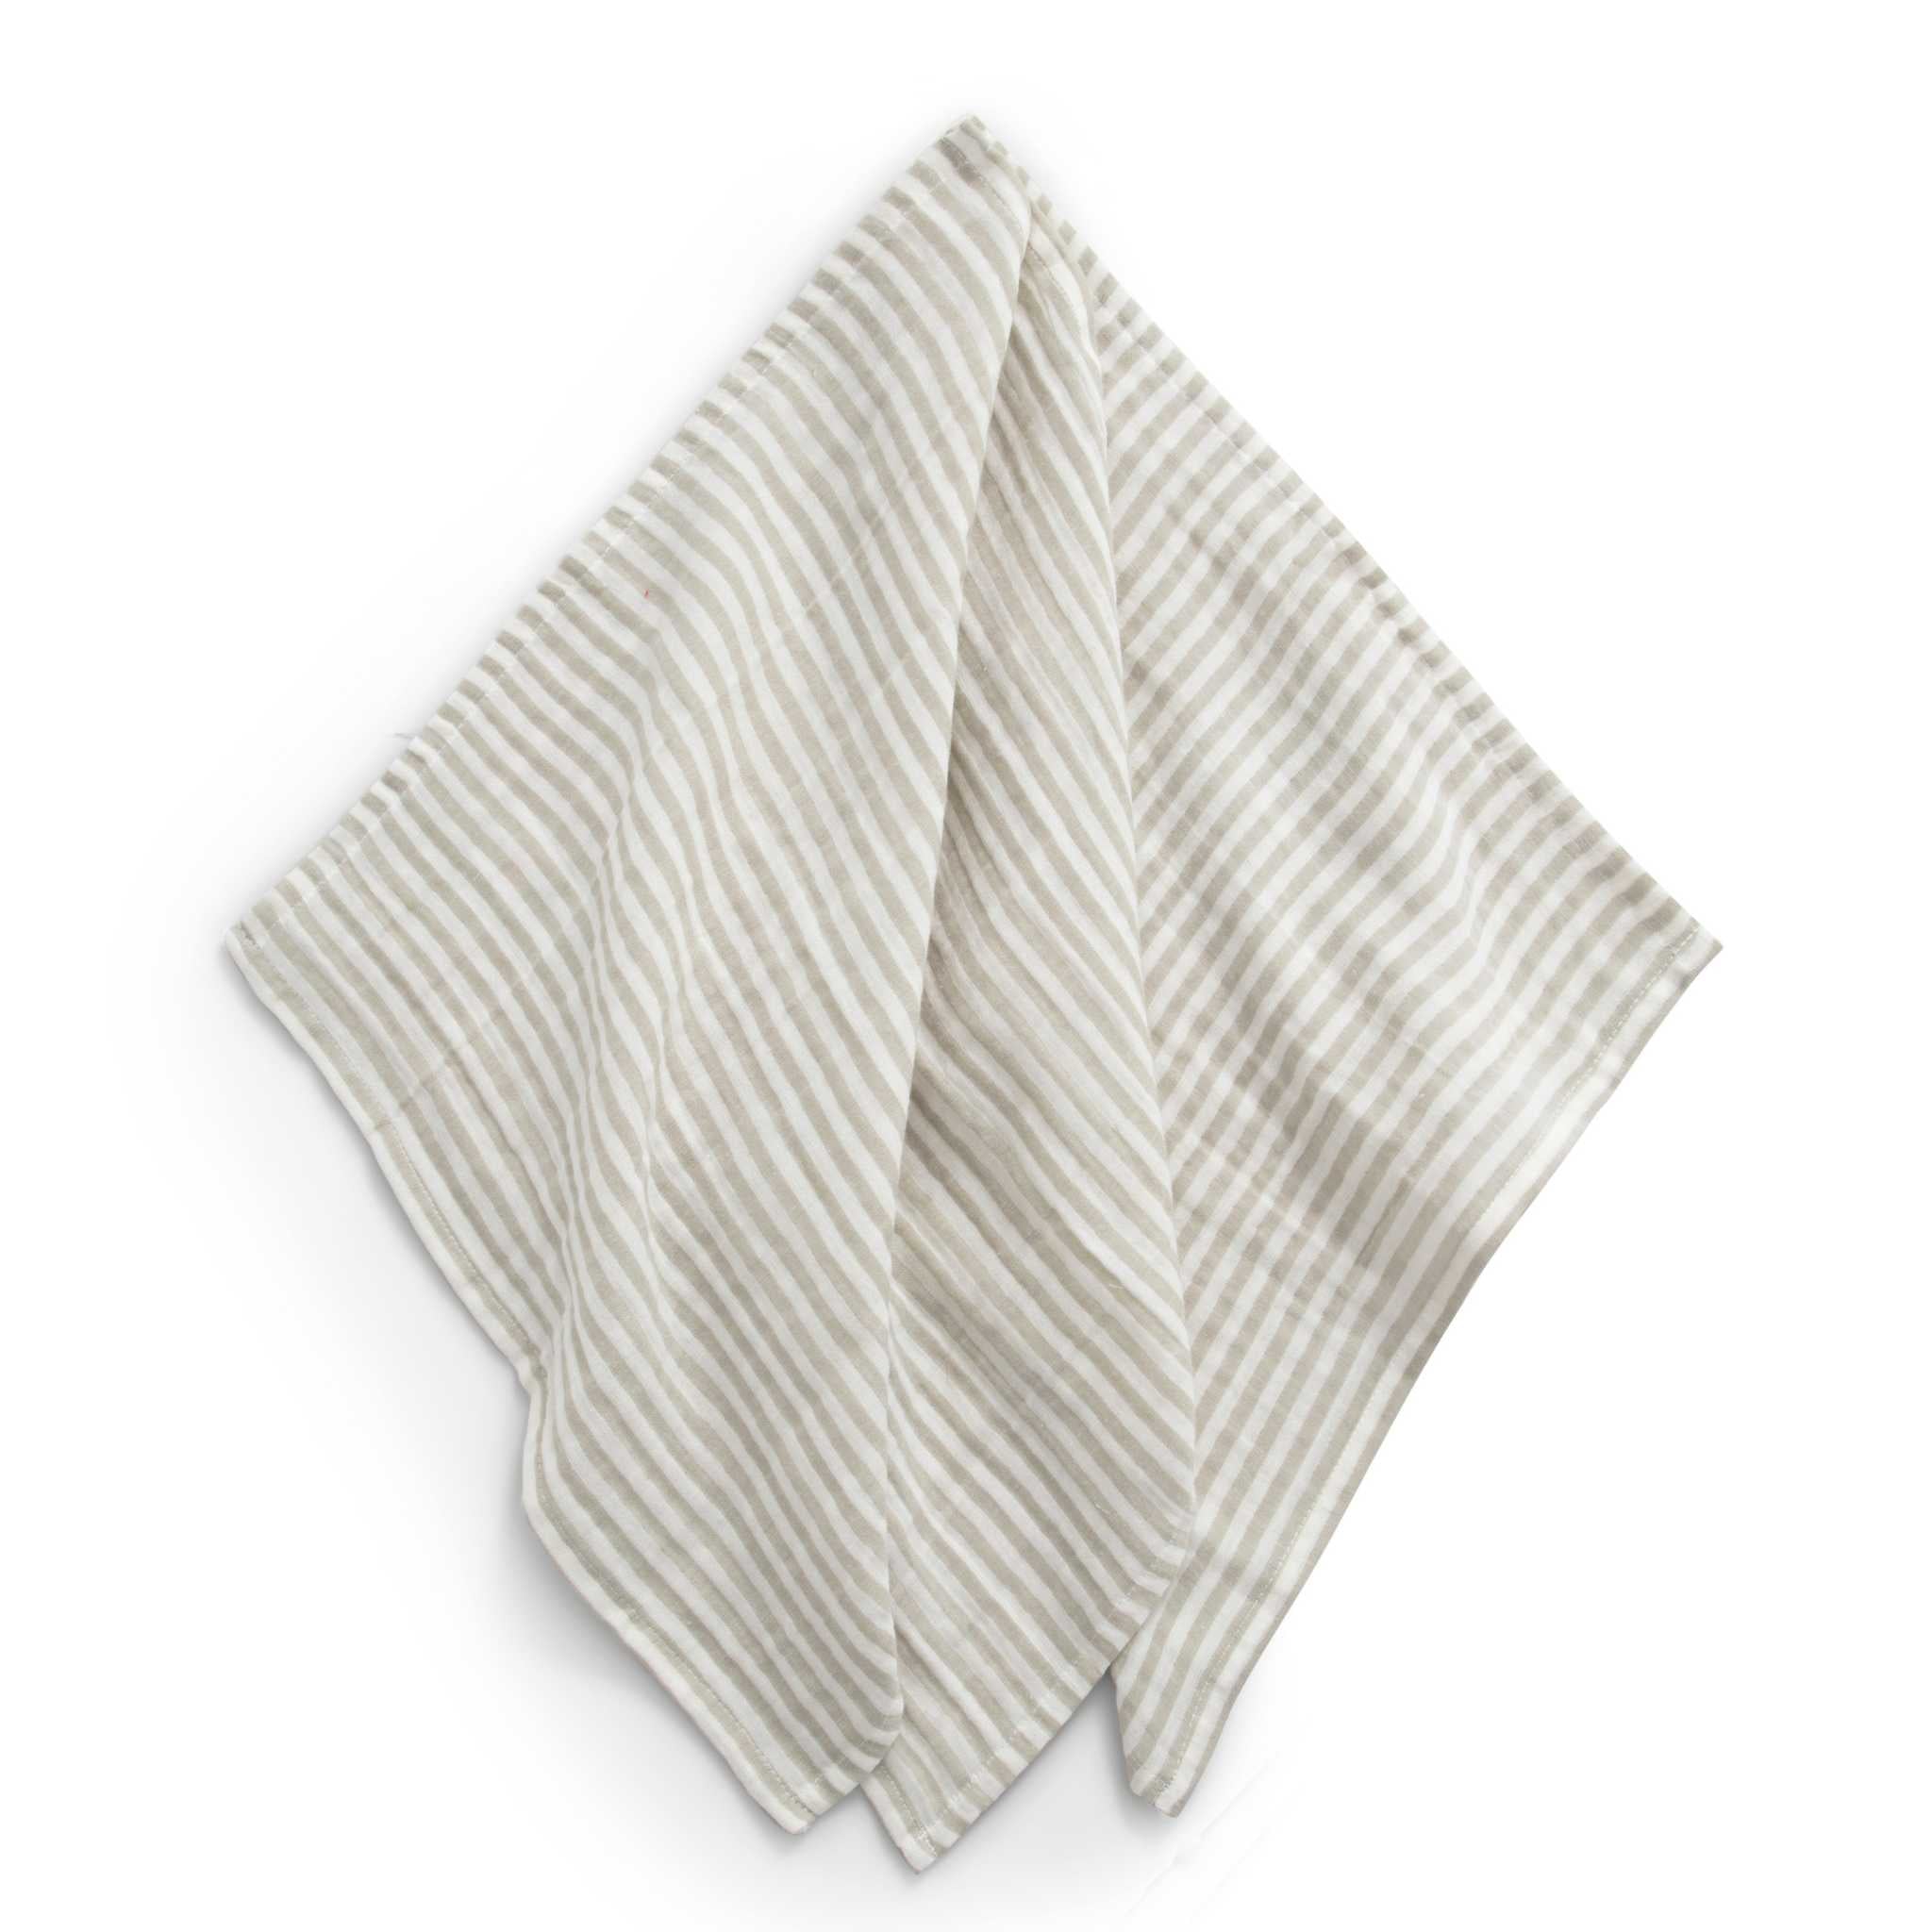 Garbo & Friends Stripe Anjou Muslin Cloths (3 Set) Opened Up